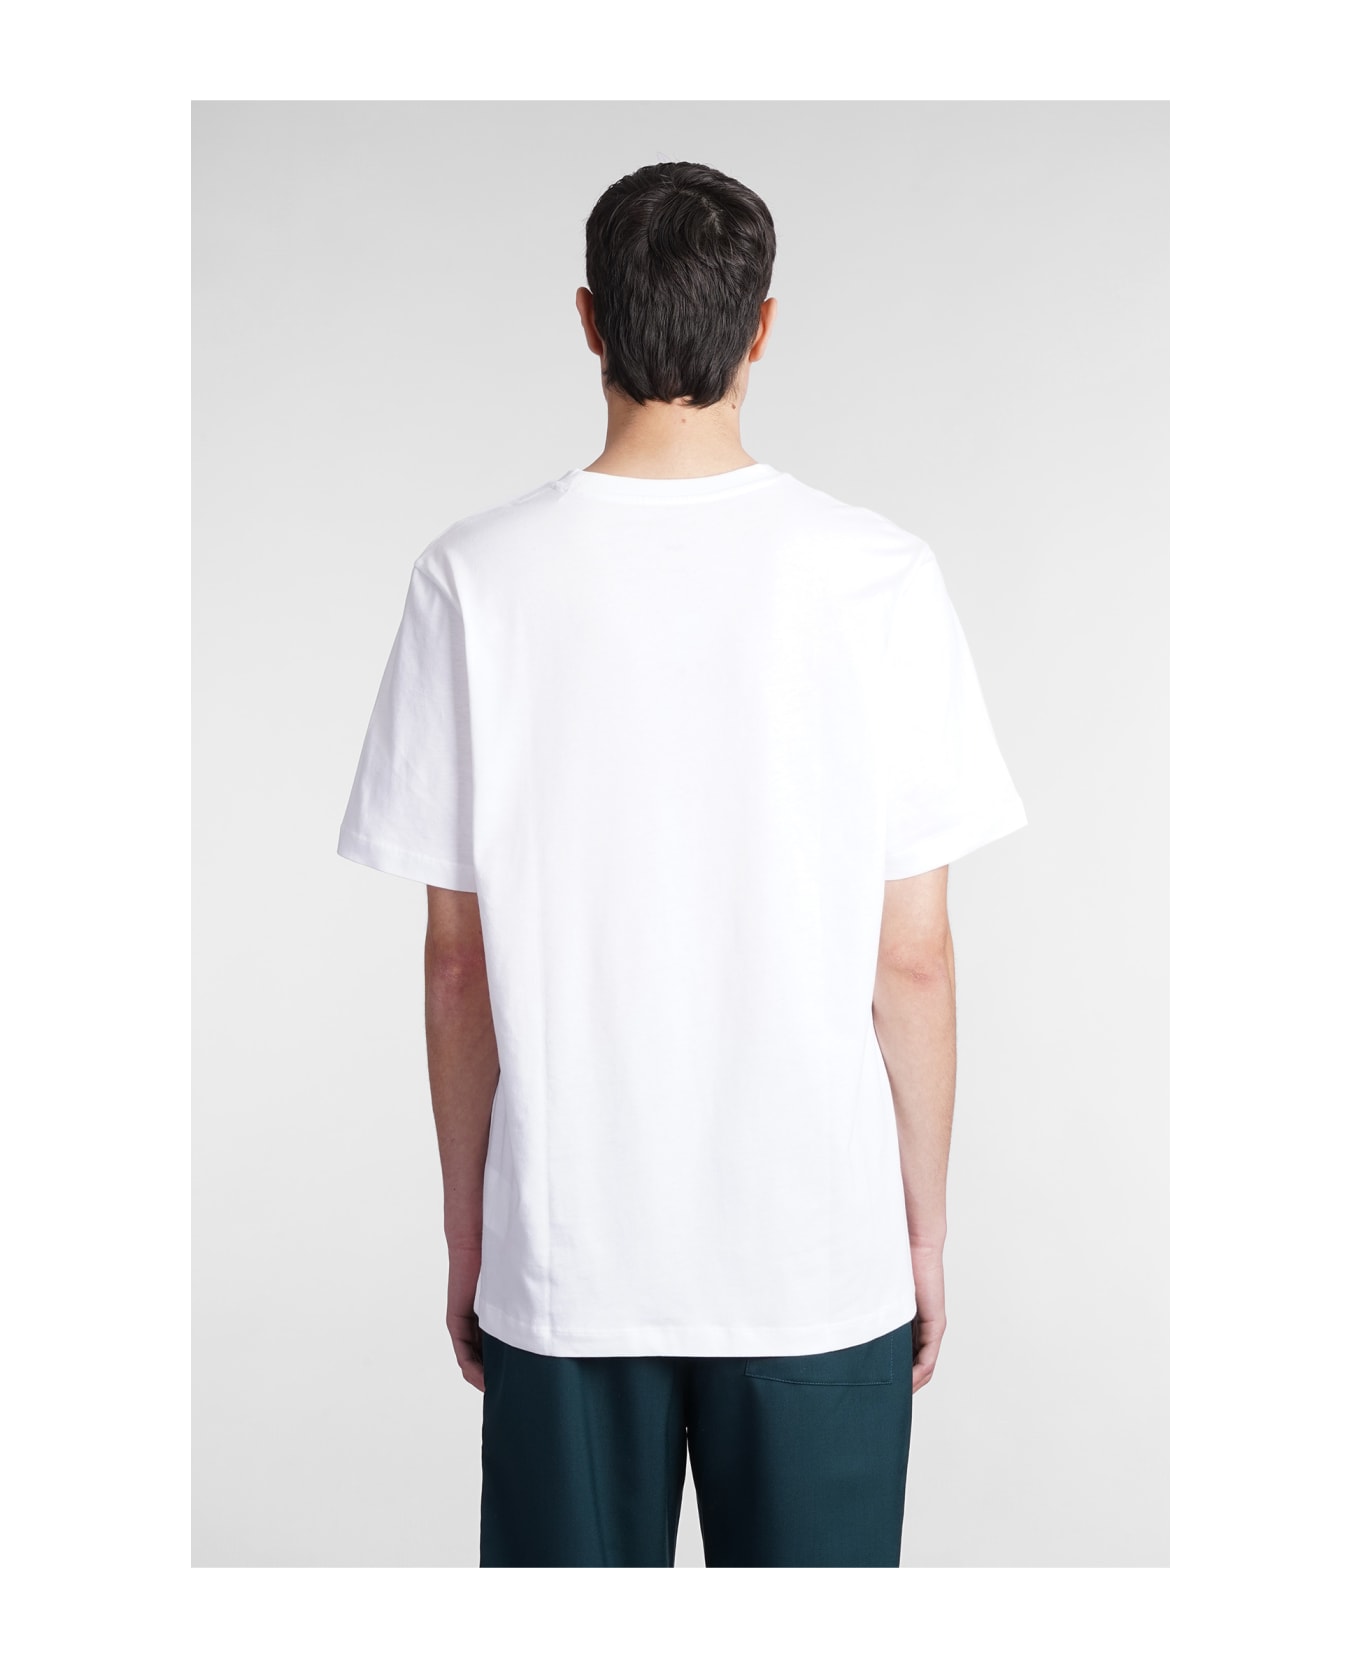 OAMC Avery T-shirt In White Cotton - White シャツ